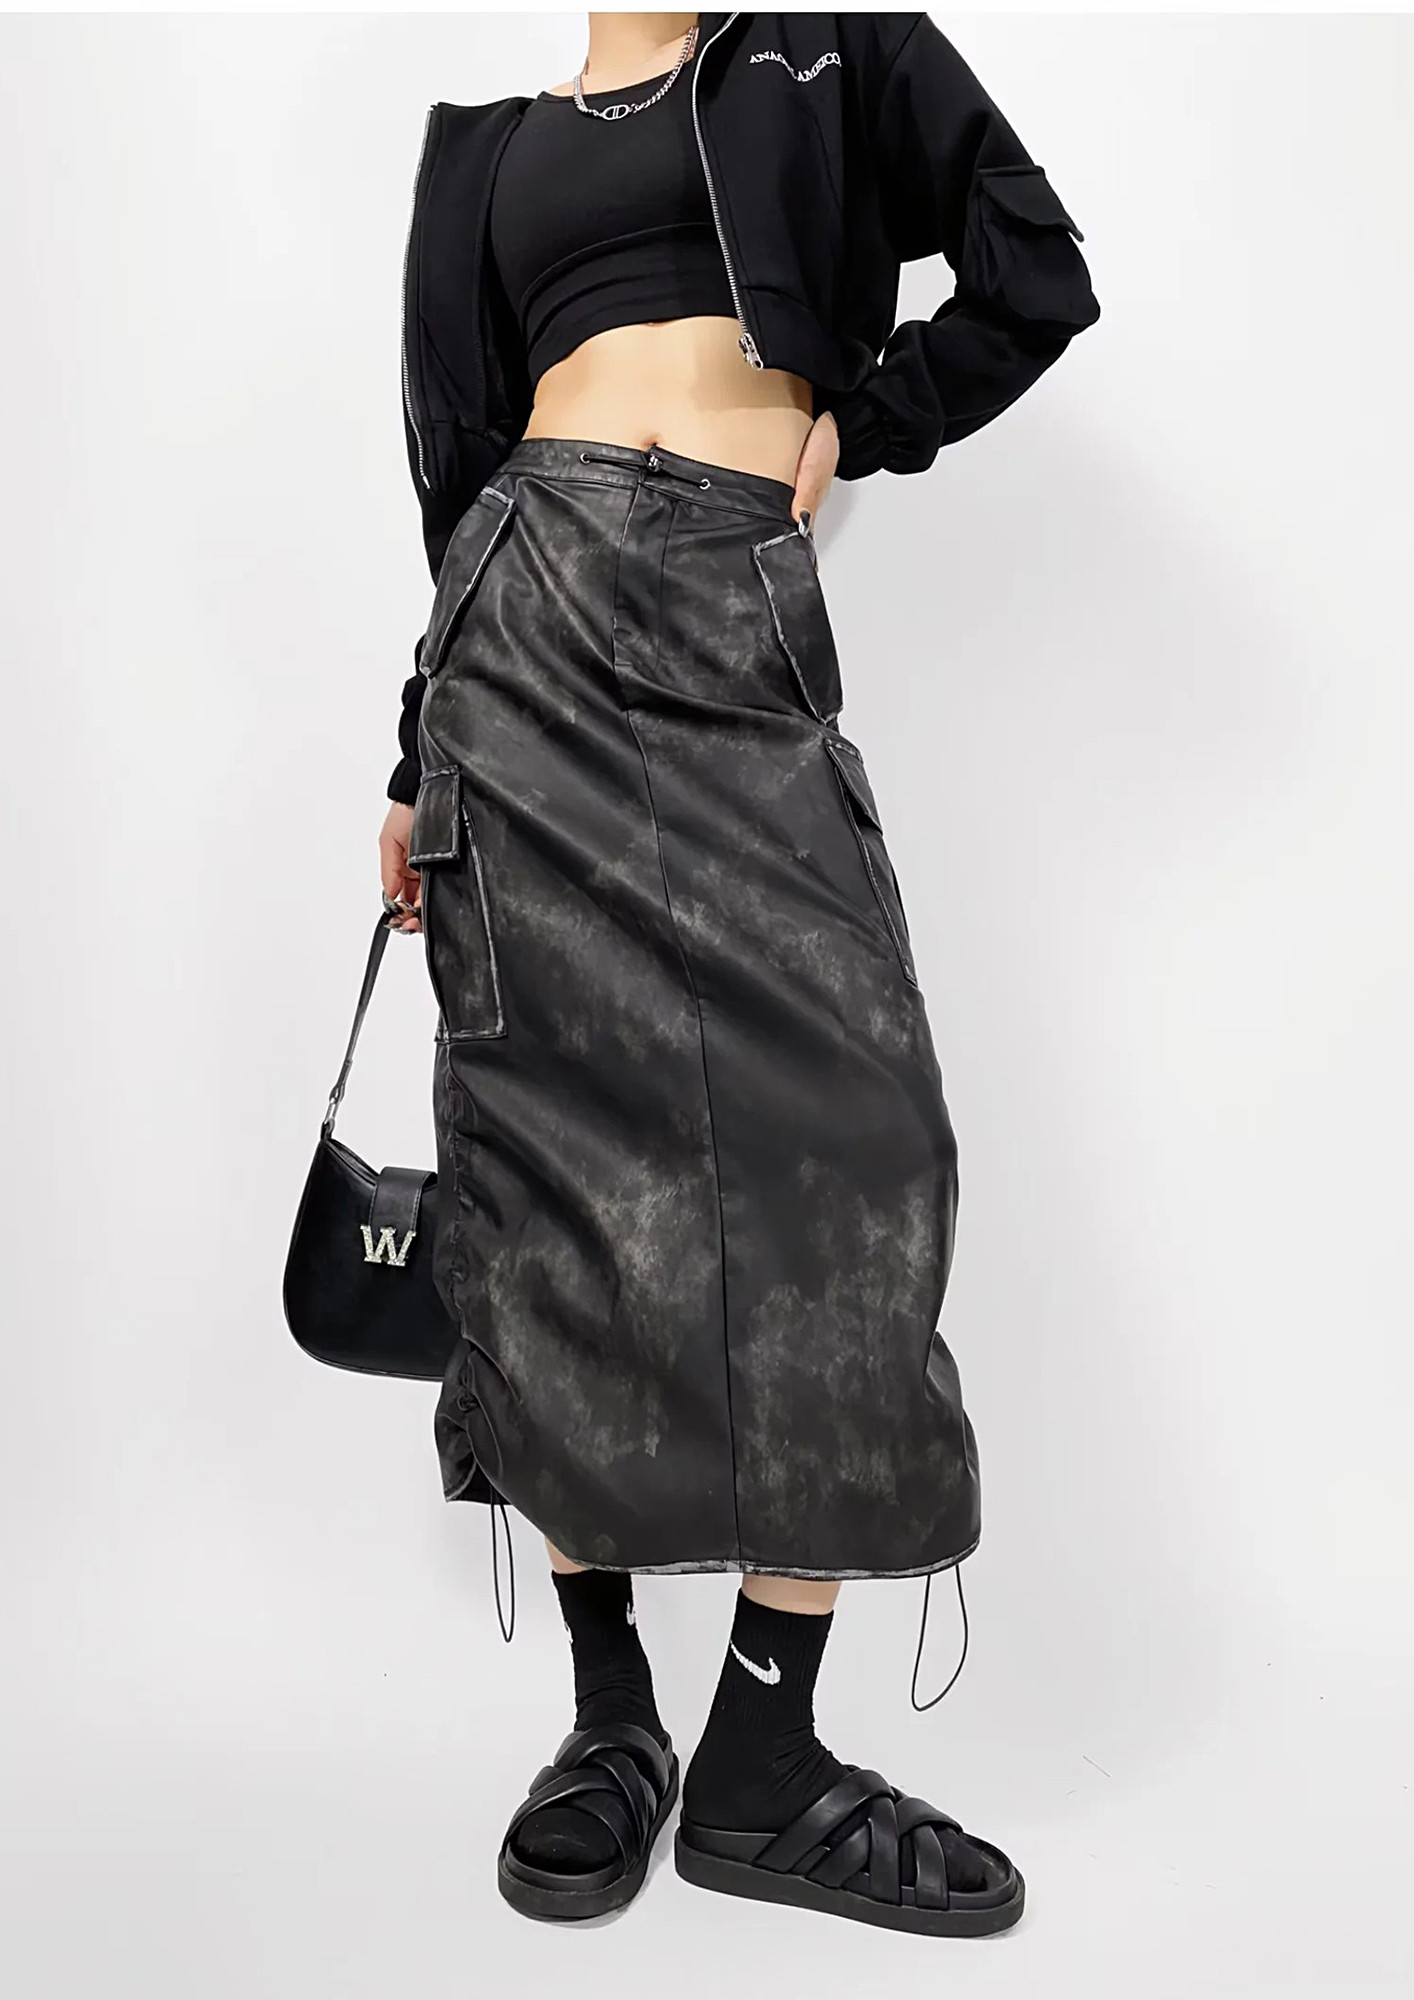 Cord-stopper Black Imitation Leather Skirt